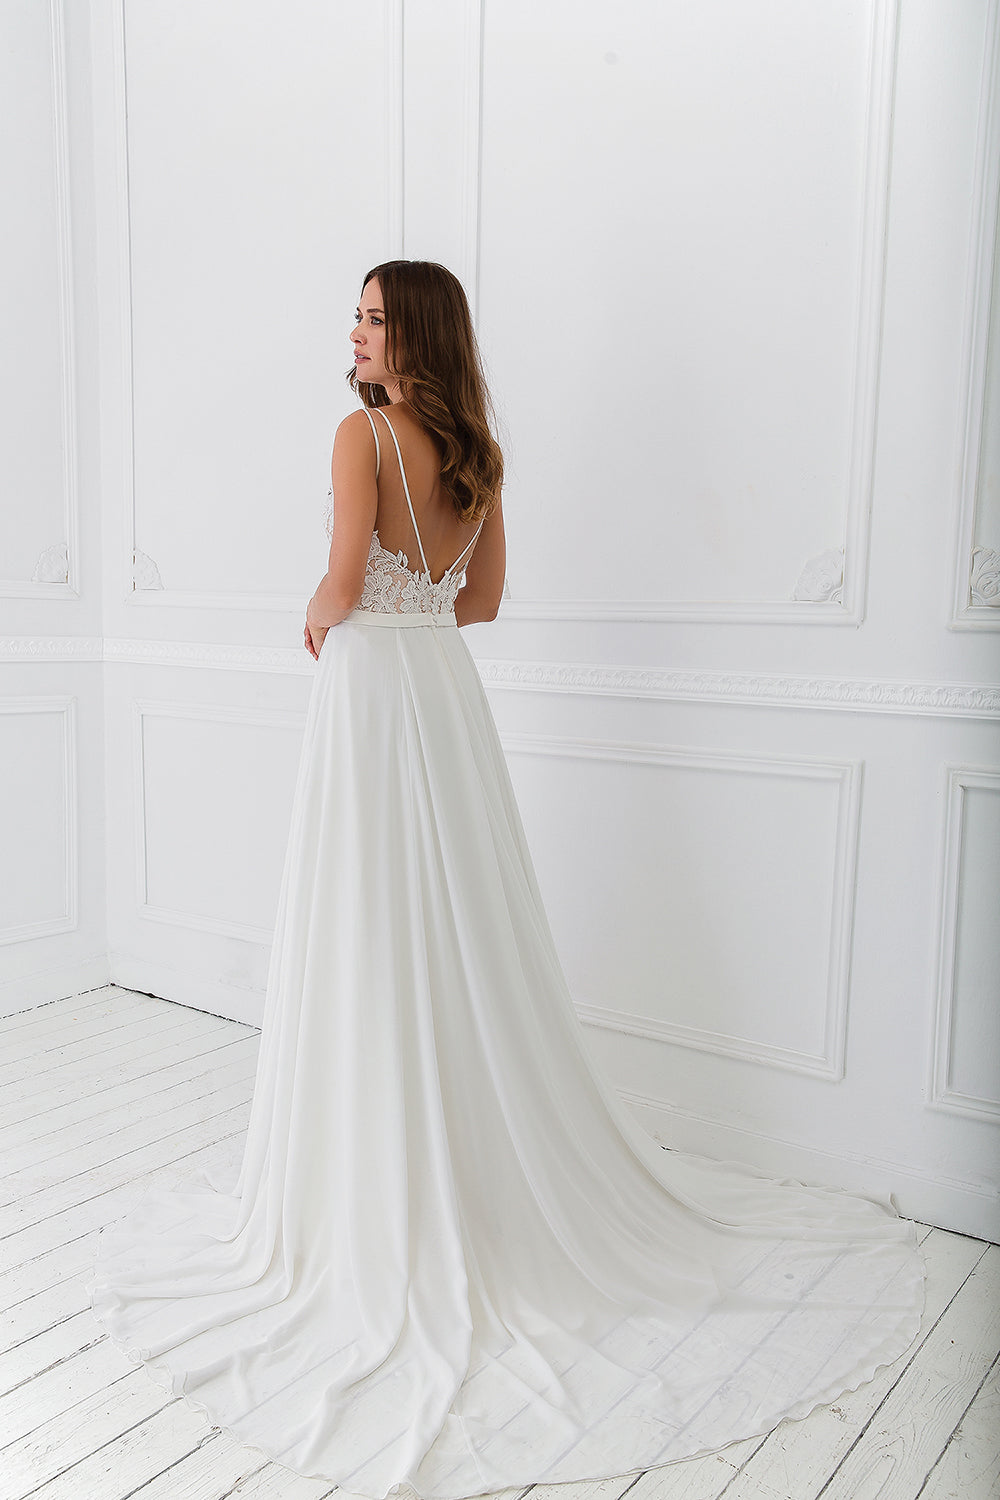 *NEW* Rings Designer Wedding Gown - #55011